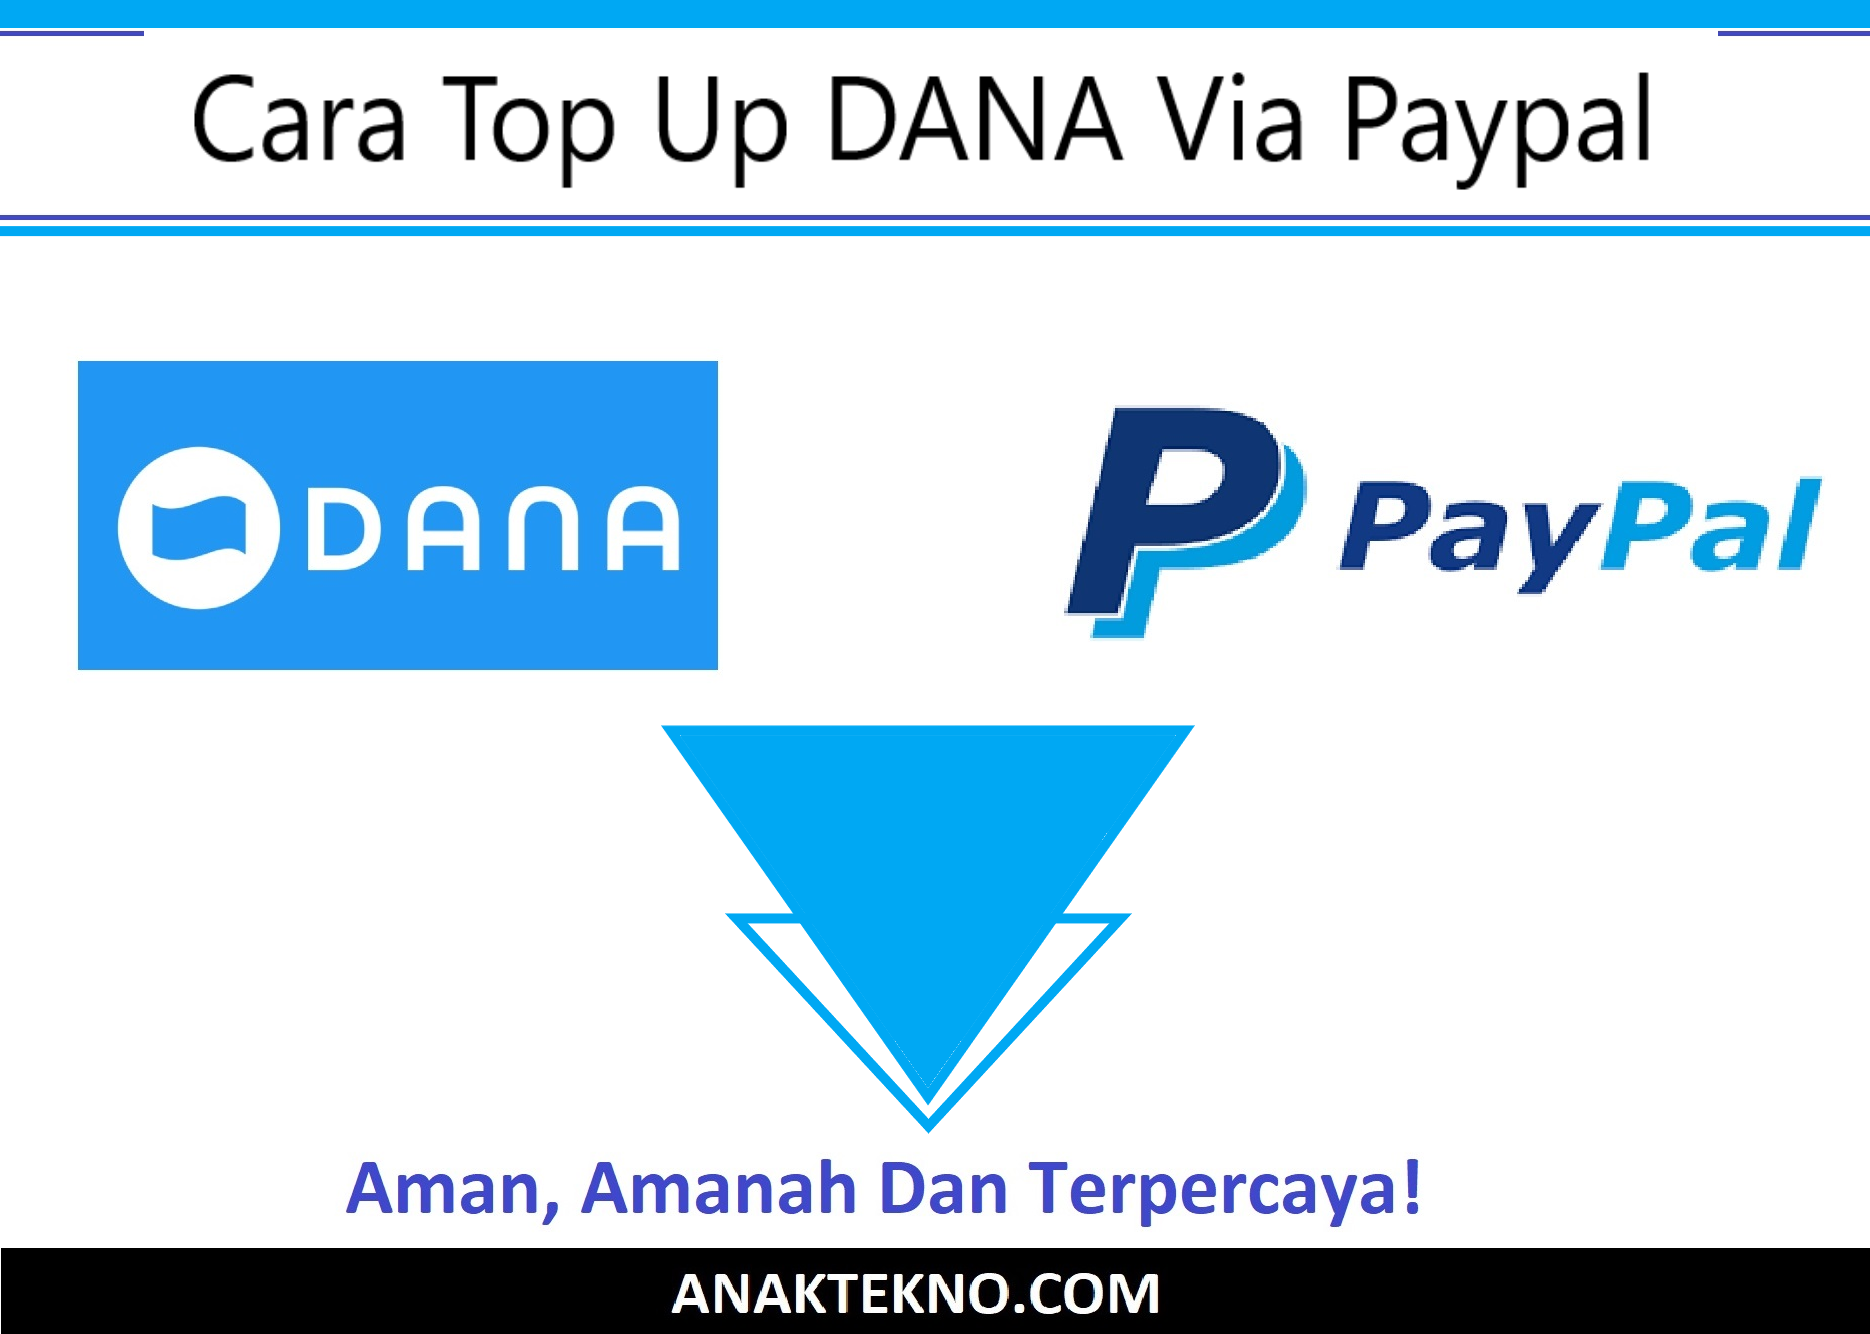 Top Up DANA Via Paypal di Bawah 10 Dollar Langsung Cair